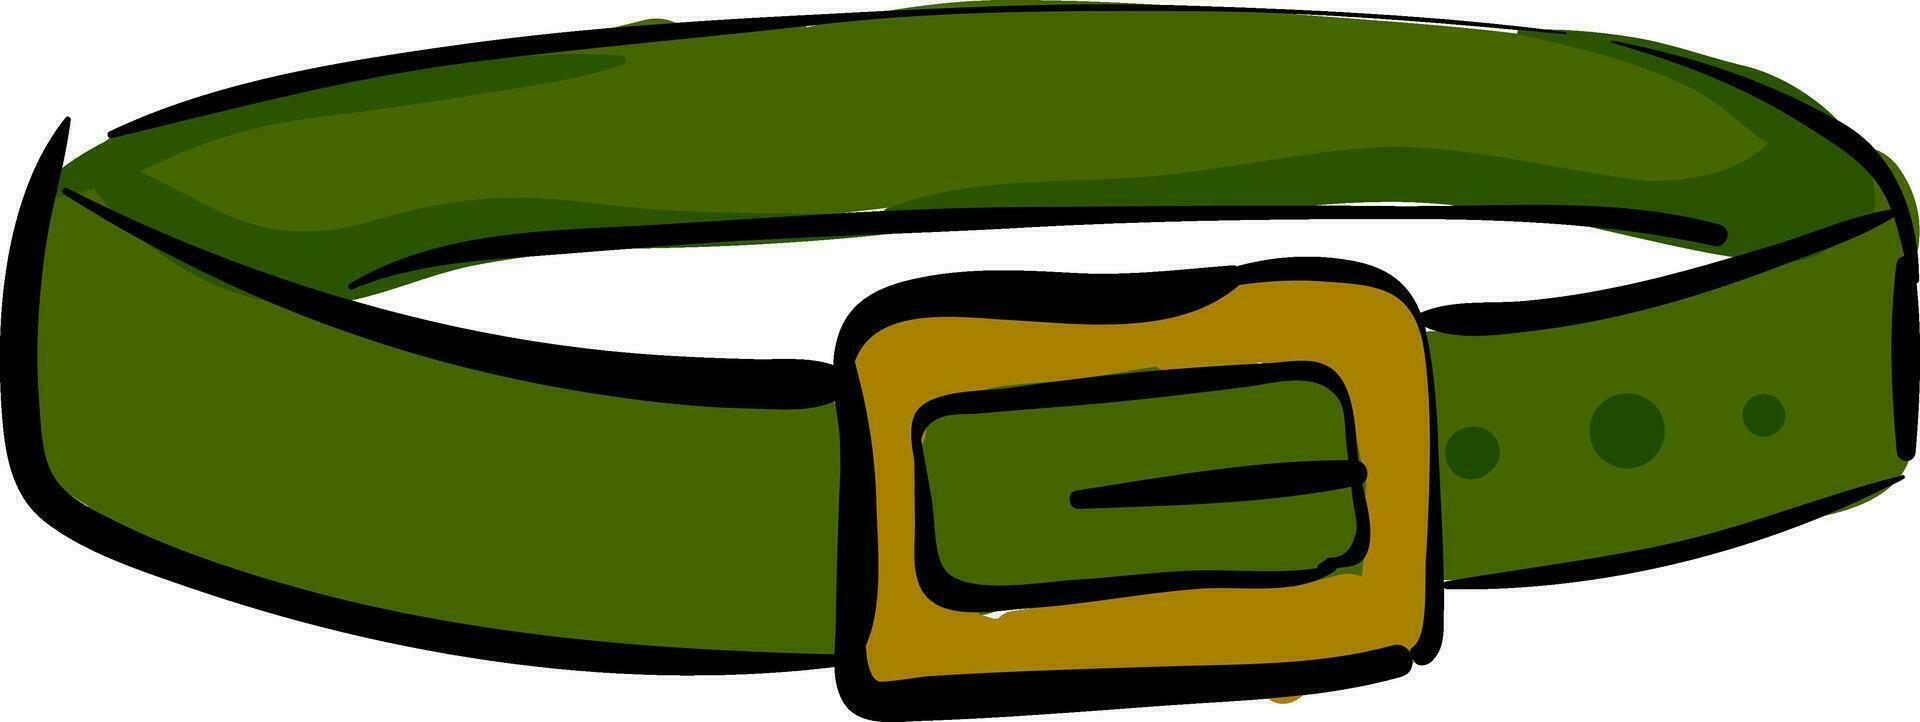 Grün Hund Halsband , Vektor oder Farbe Illustration